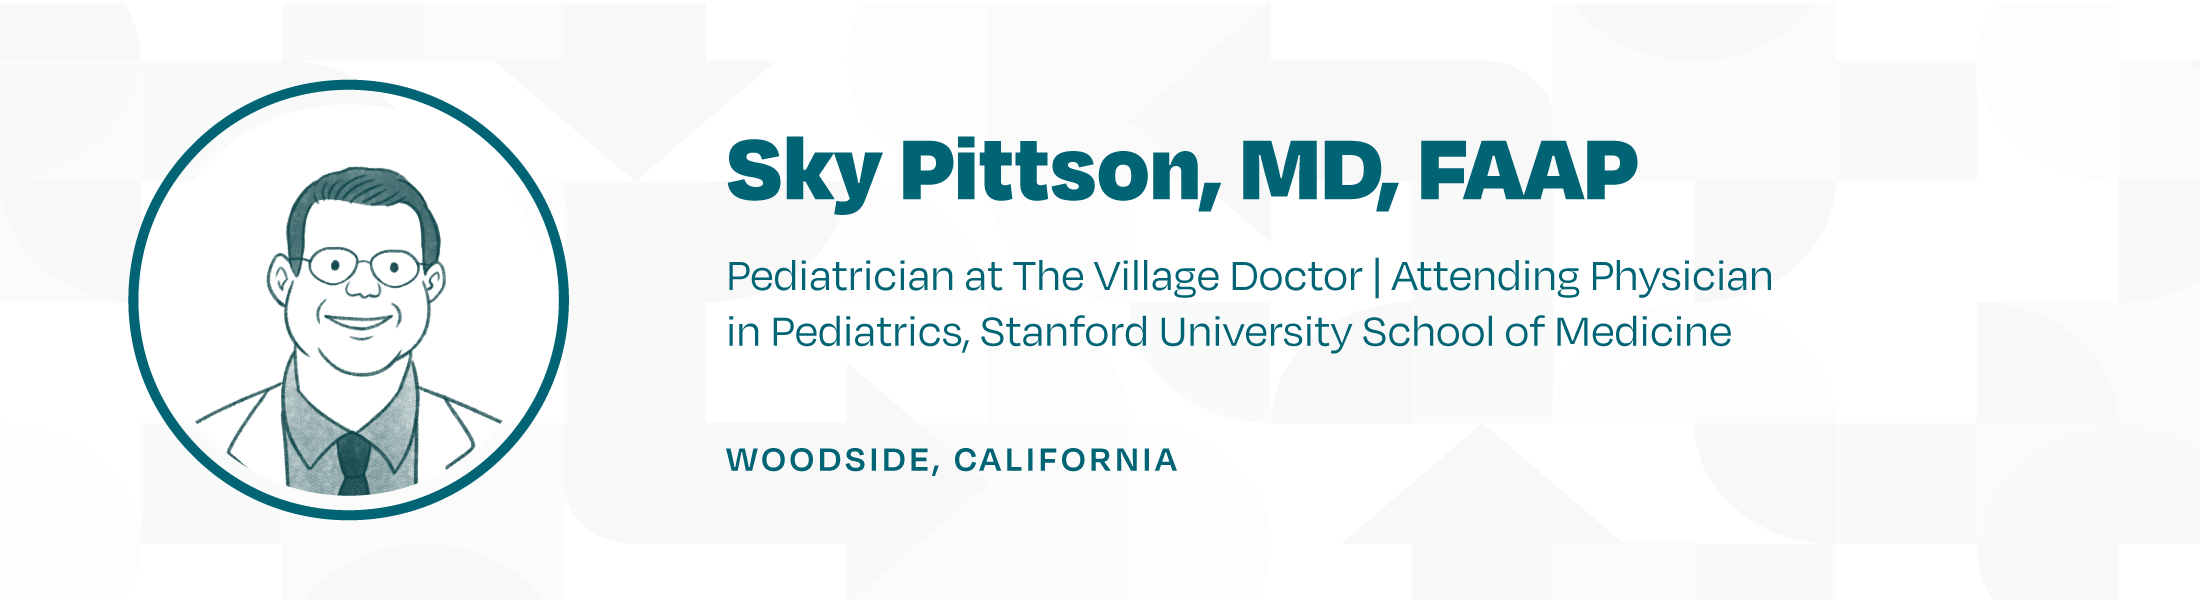 Dr. Sky Pittson, Attending Physician in Pediatrics